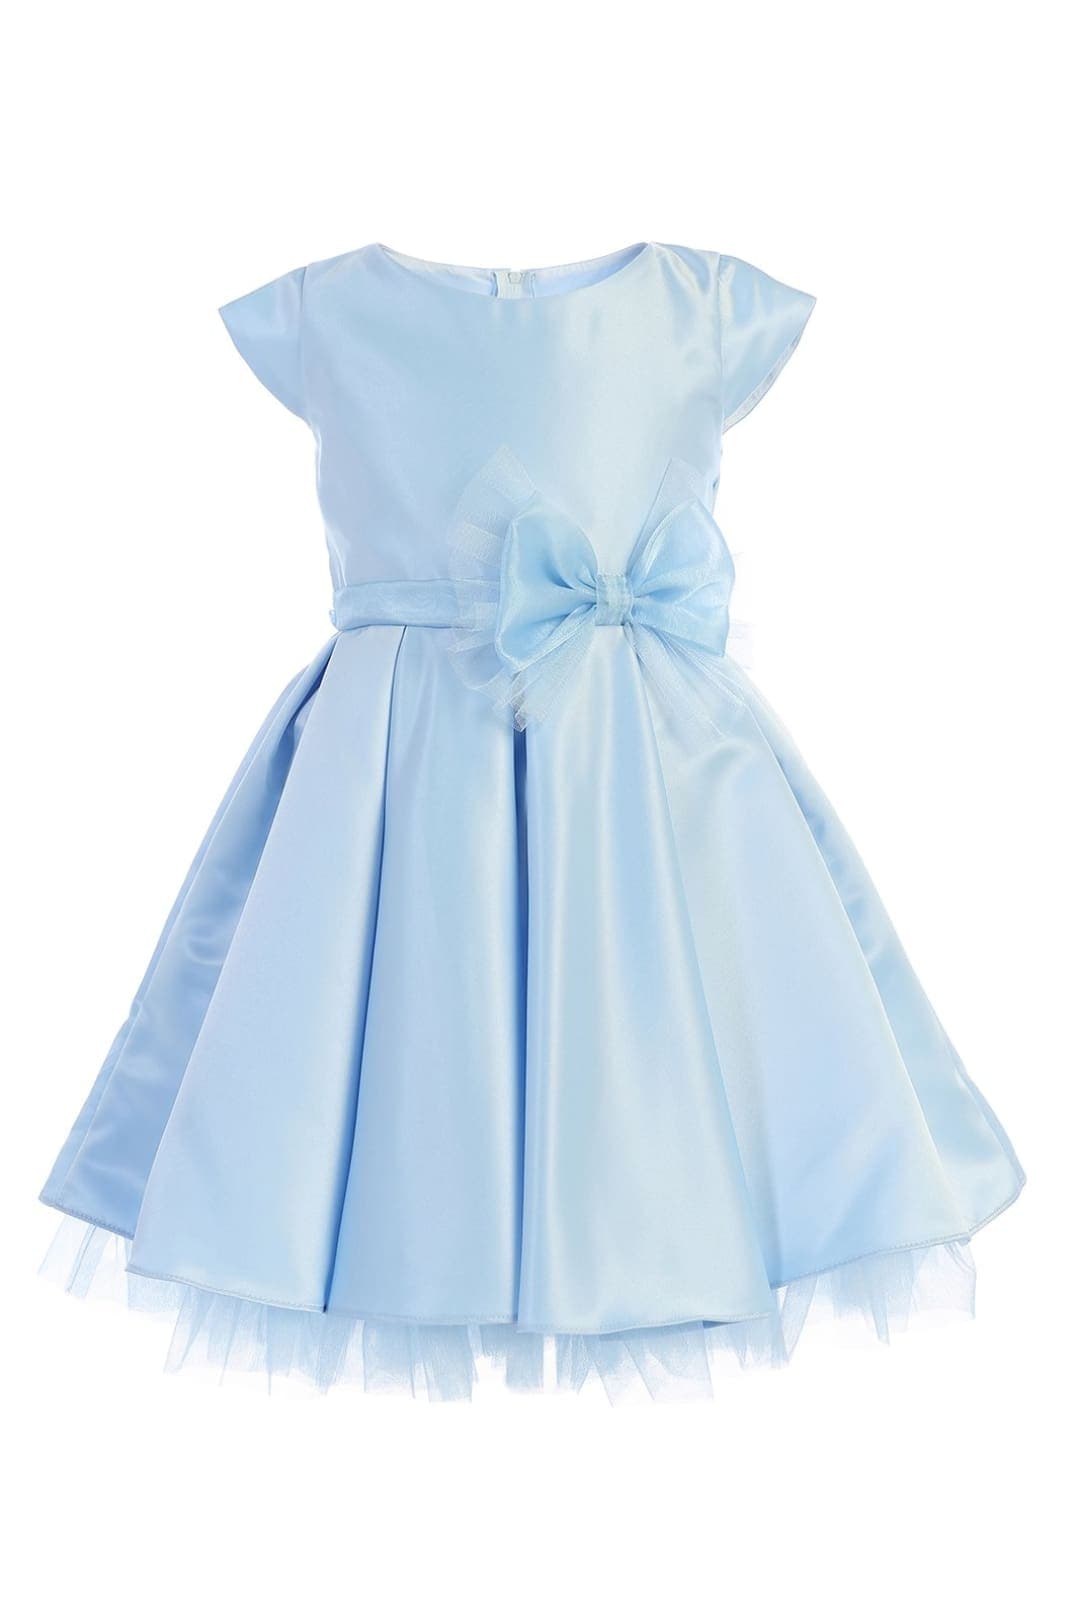 Little Girl Dress with Oversized Bow - LAK711 - LIGHT BLUE / 2